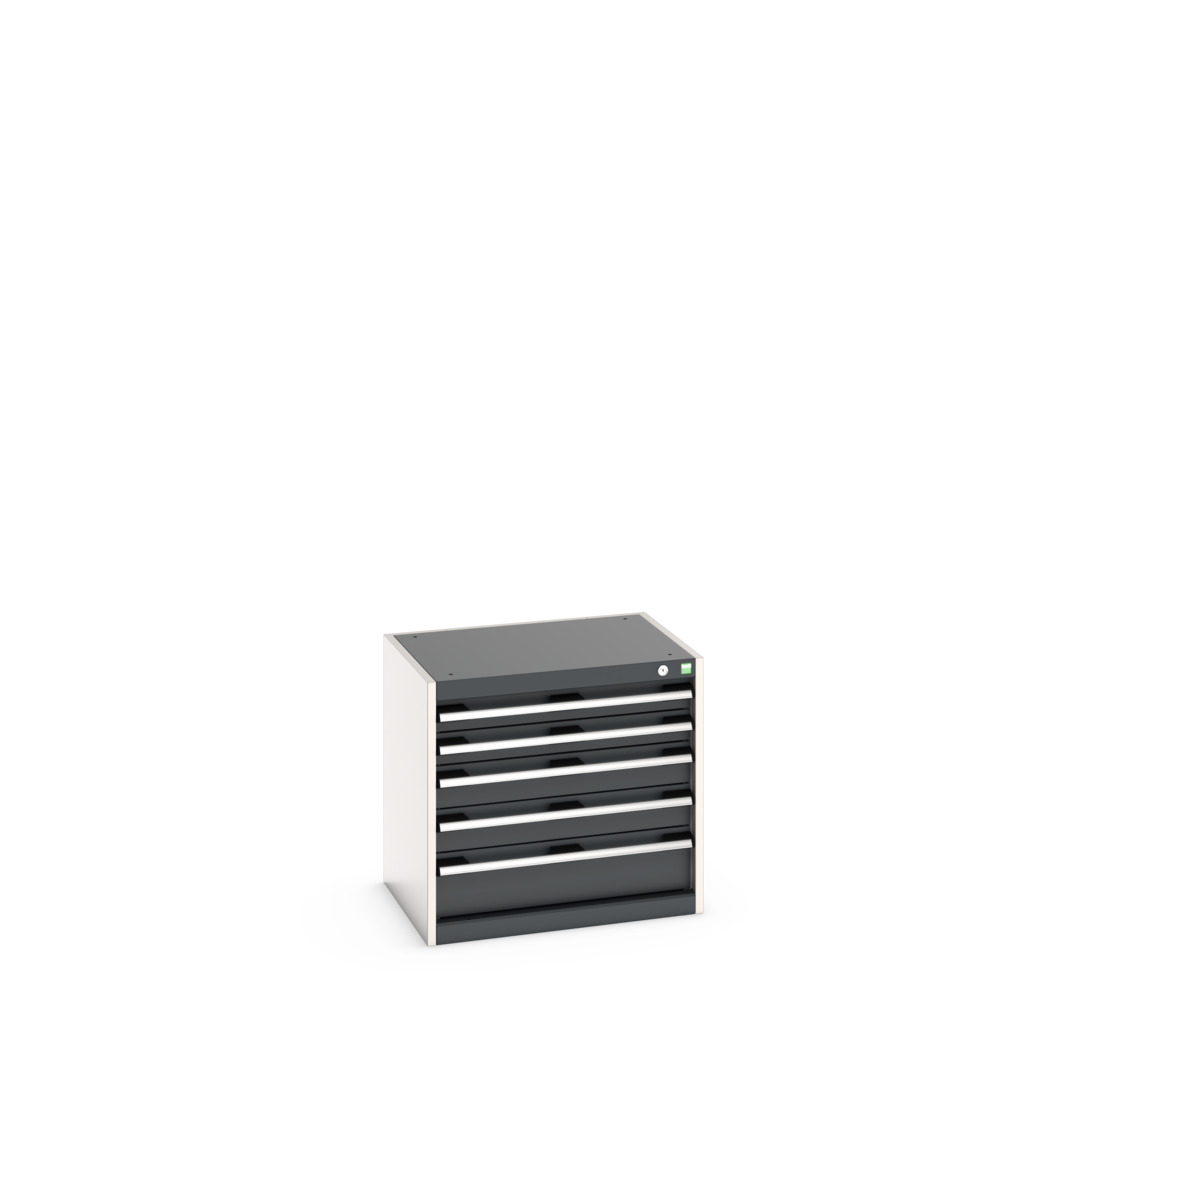 40011061. - cubio drawer cabinet